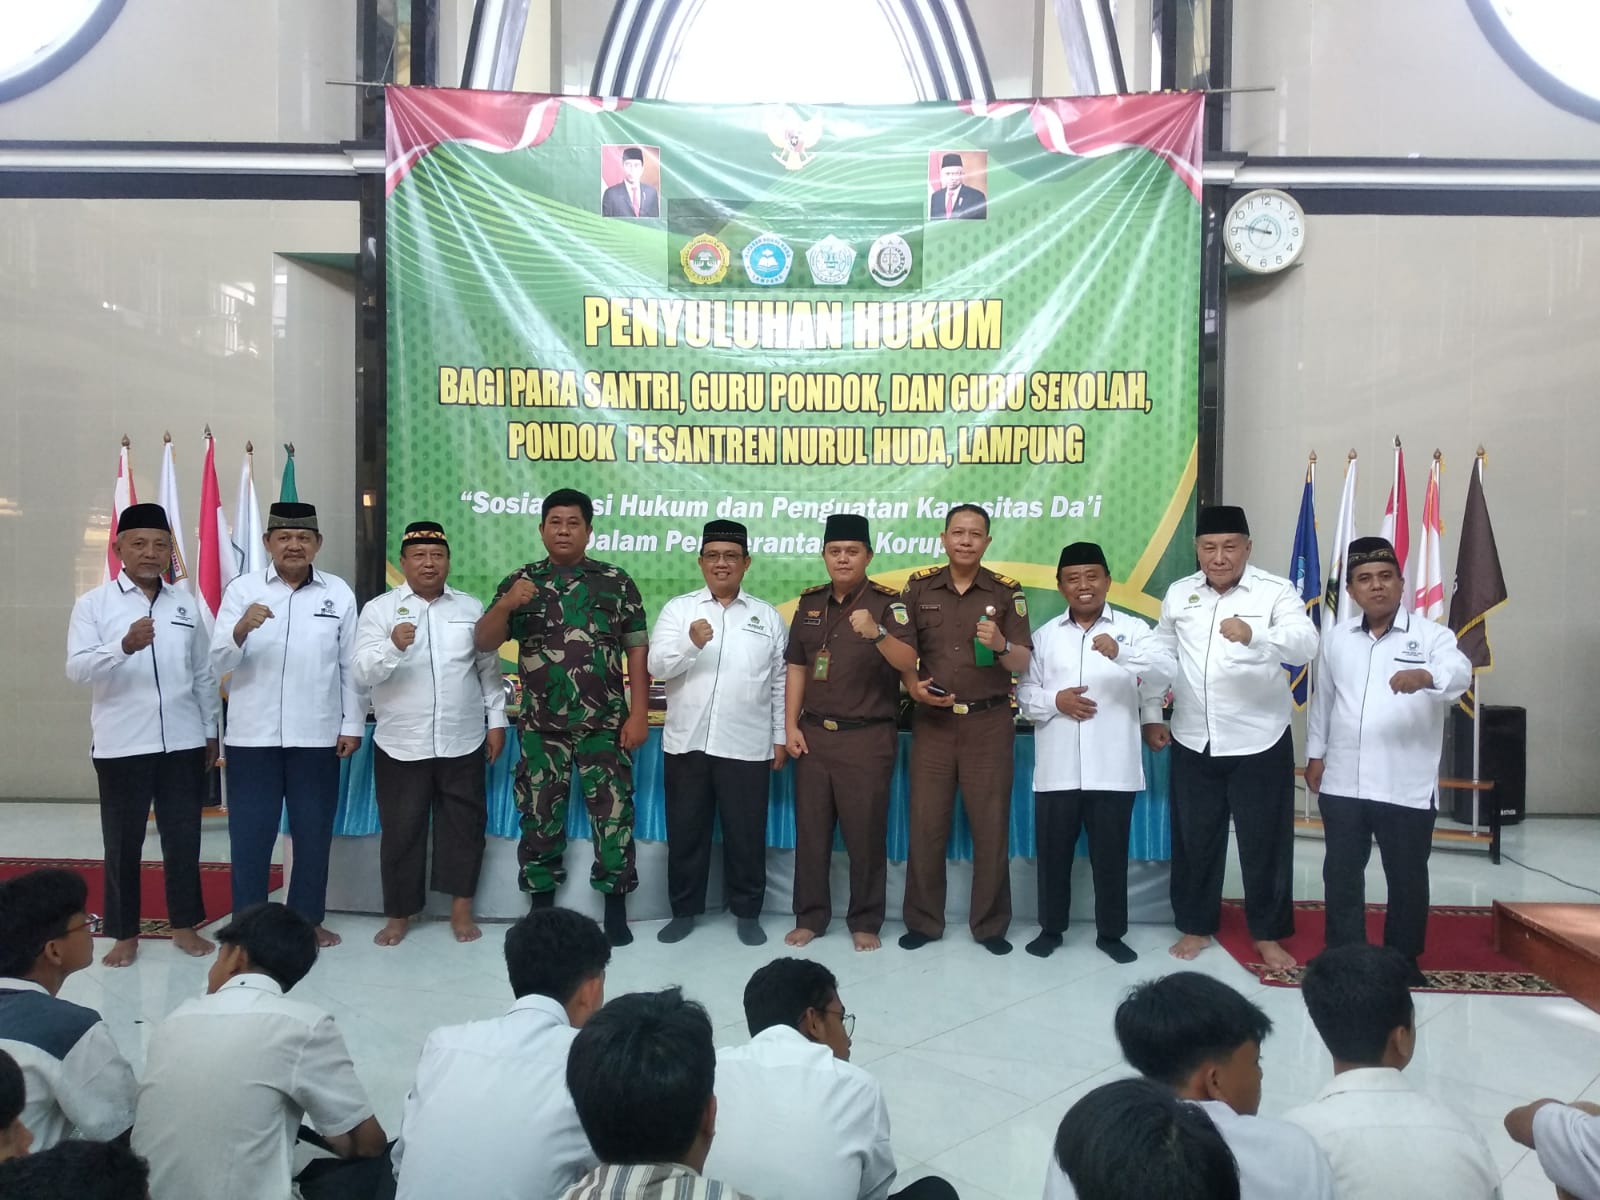 DPW LDII Lampung Gelar Penyuluhan Hukum 